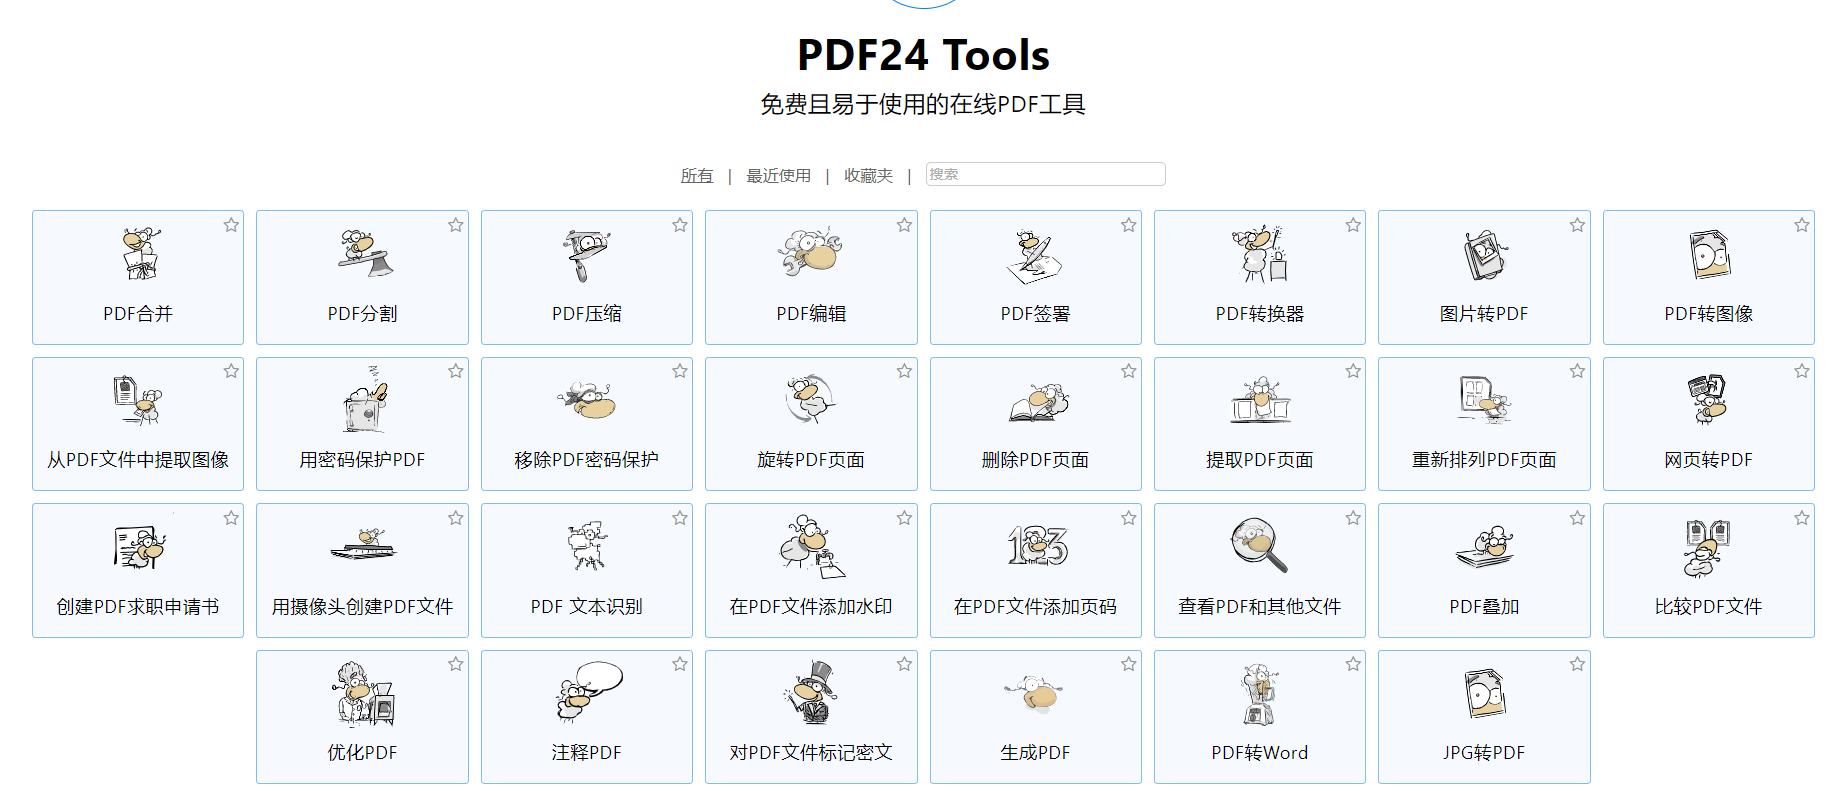 PDF24 Tools，pdf格式转换、编辑阅读工具